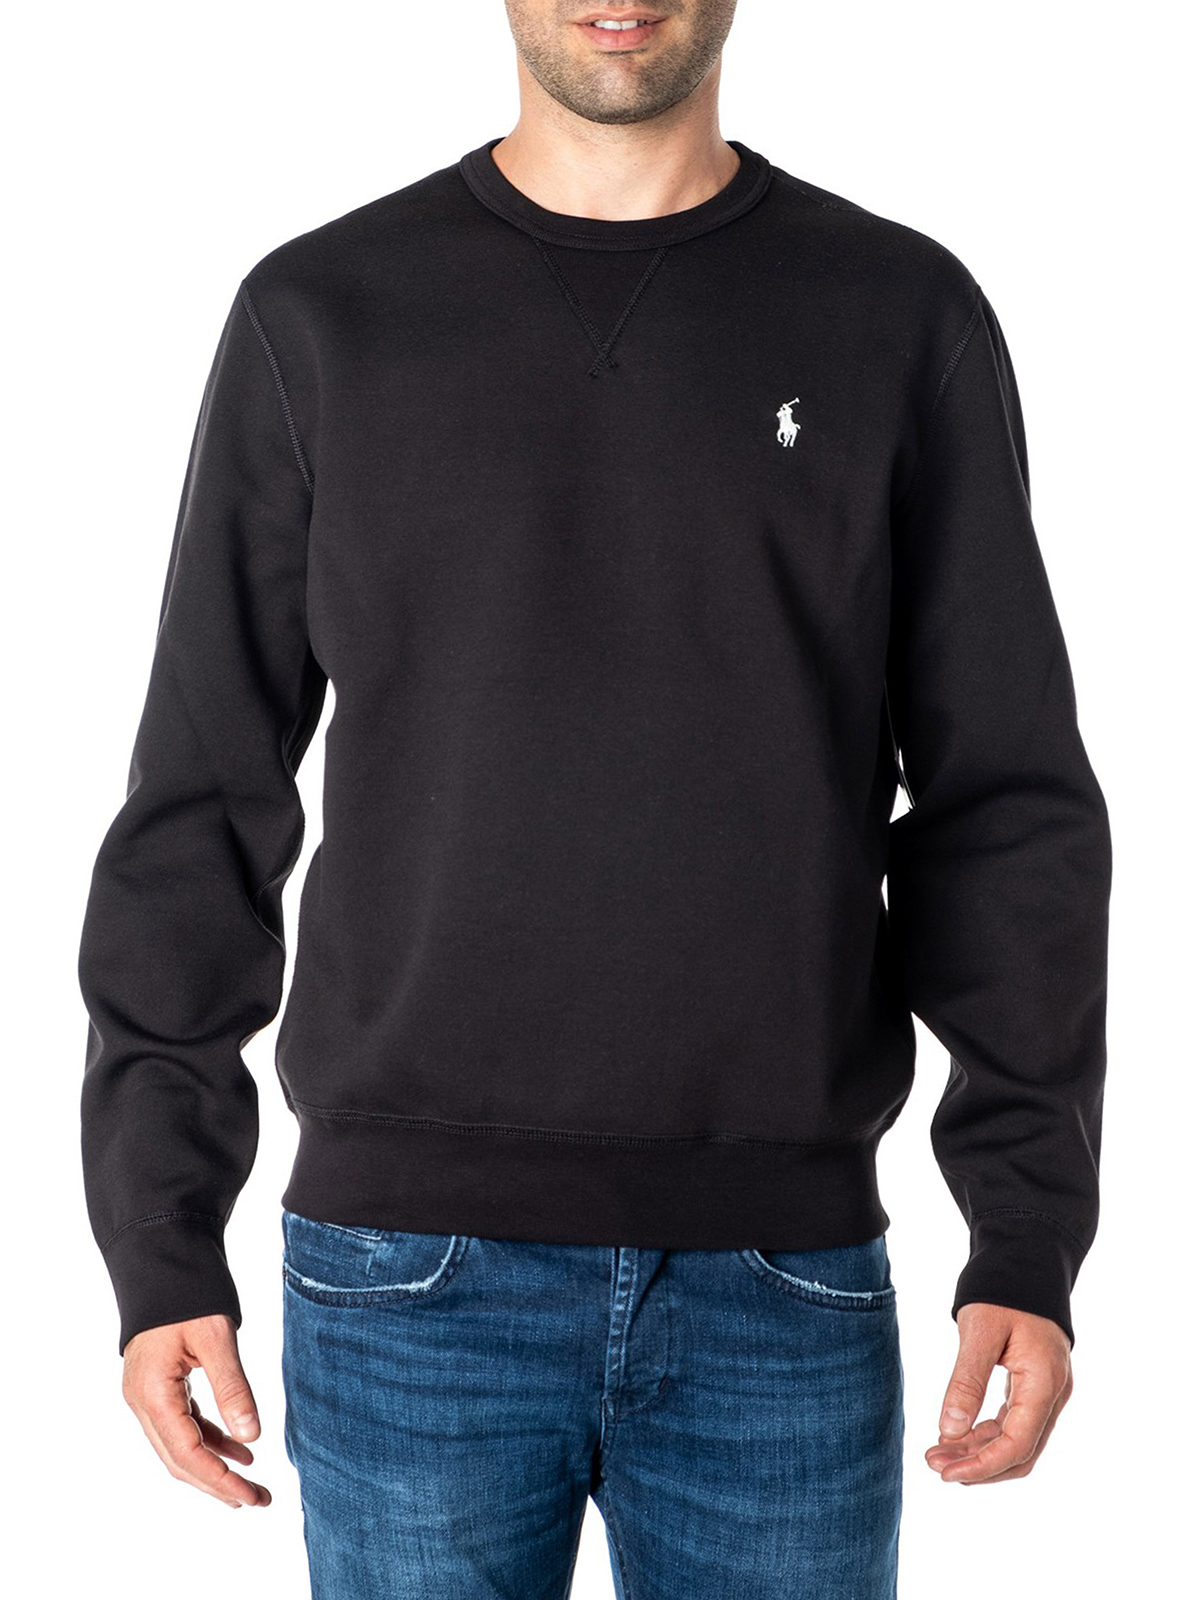 Sweatshirts & Sweaters Polo Ralph Lauren - Black cotton blend sweatshirt -  710675313021